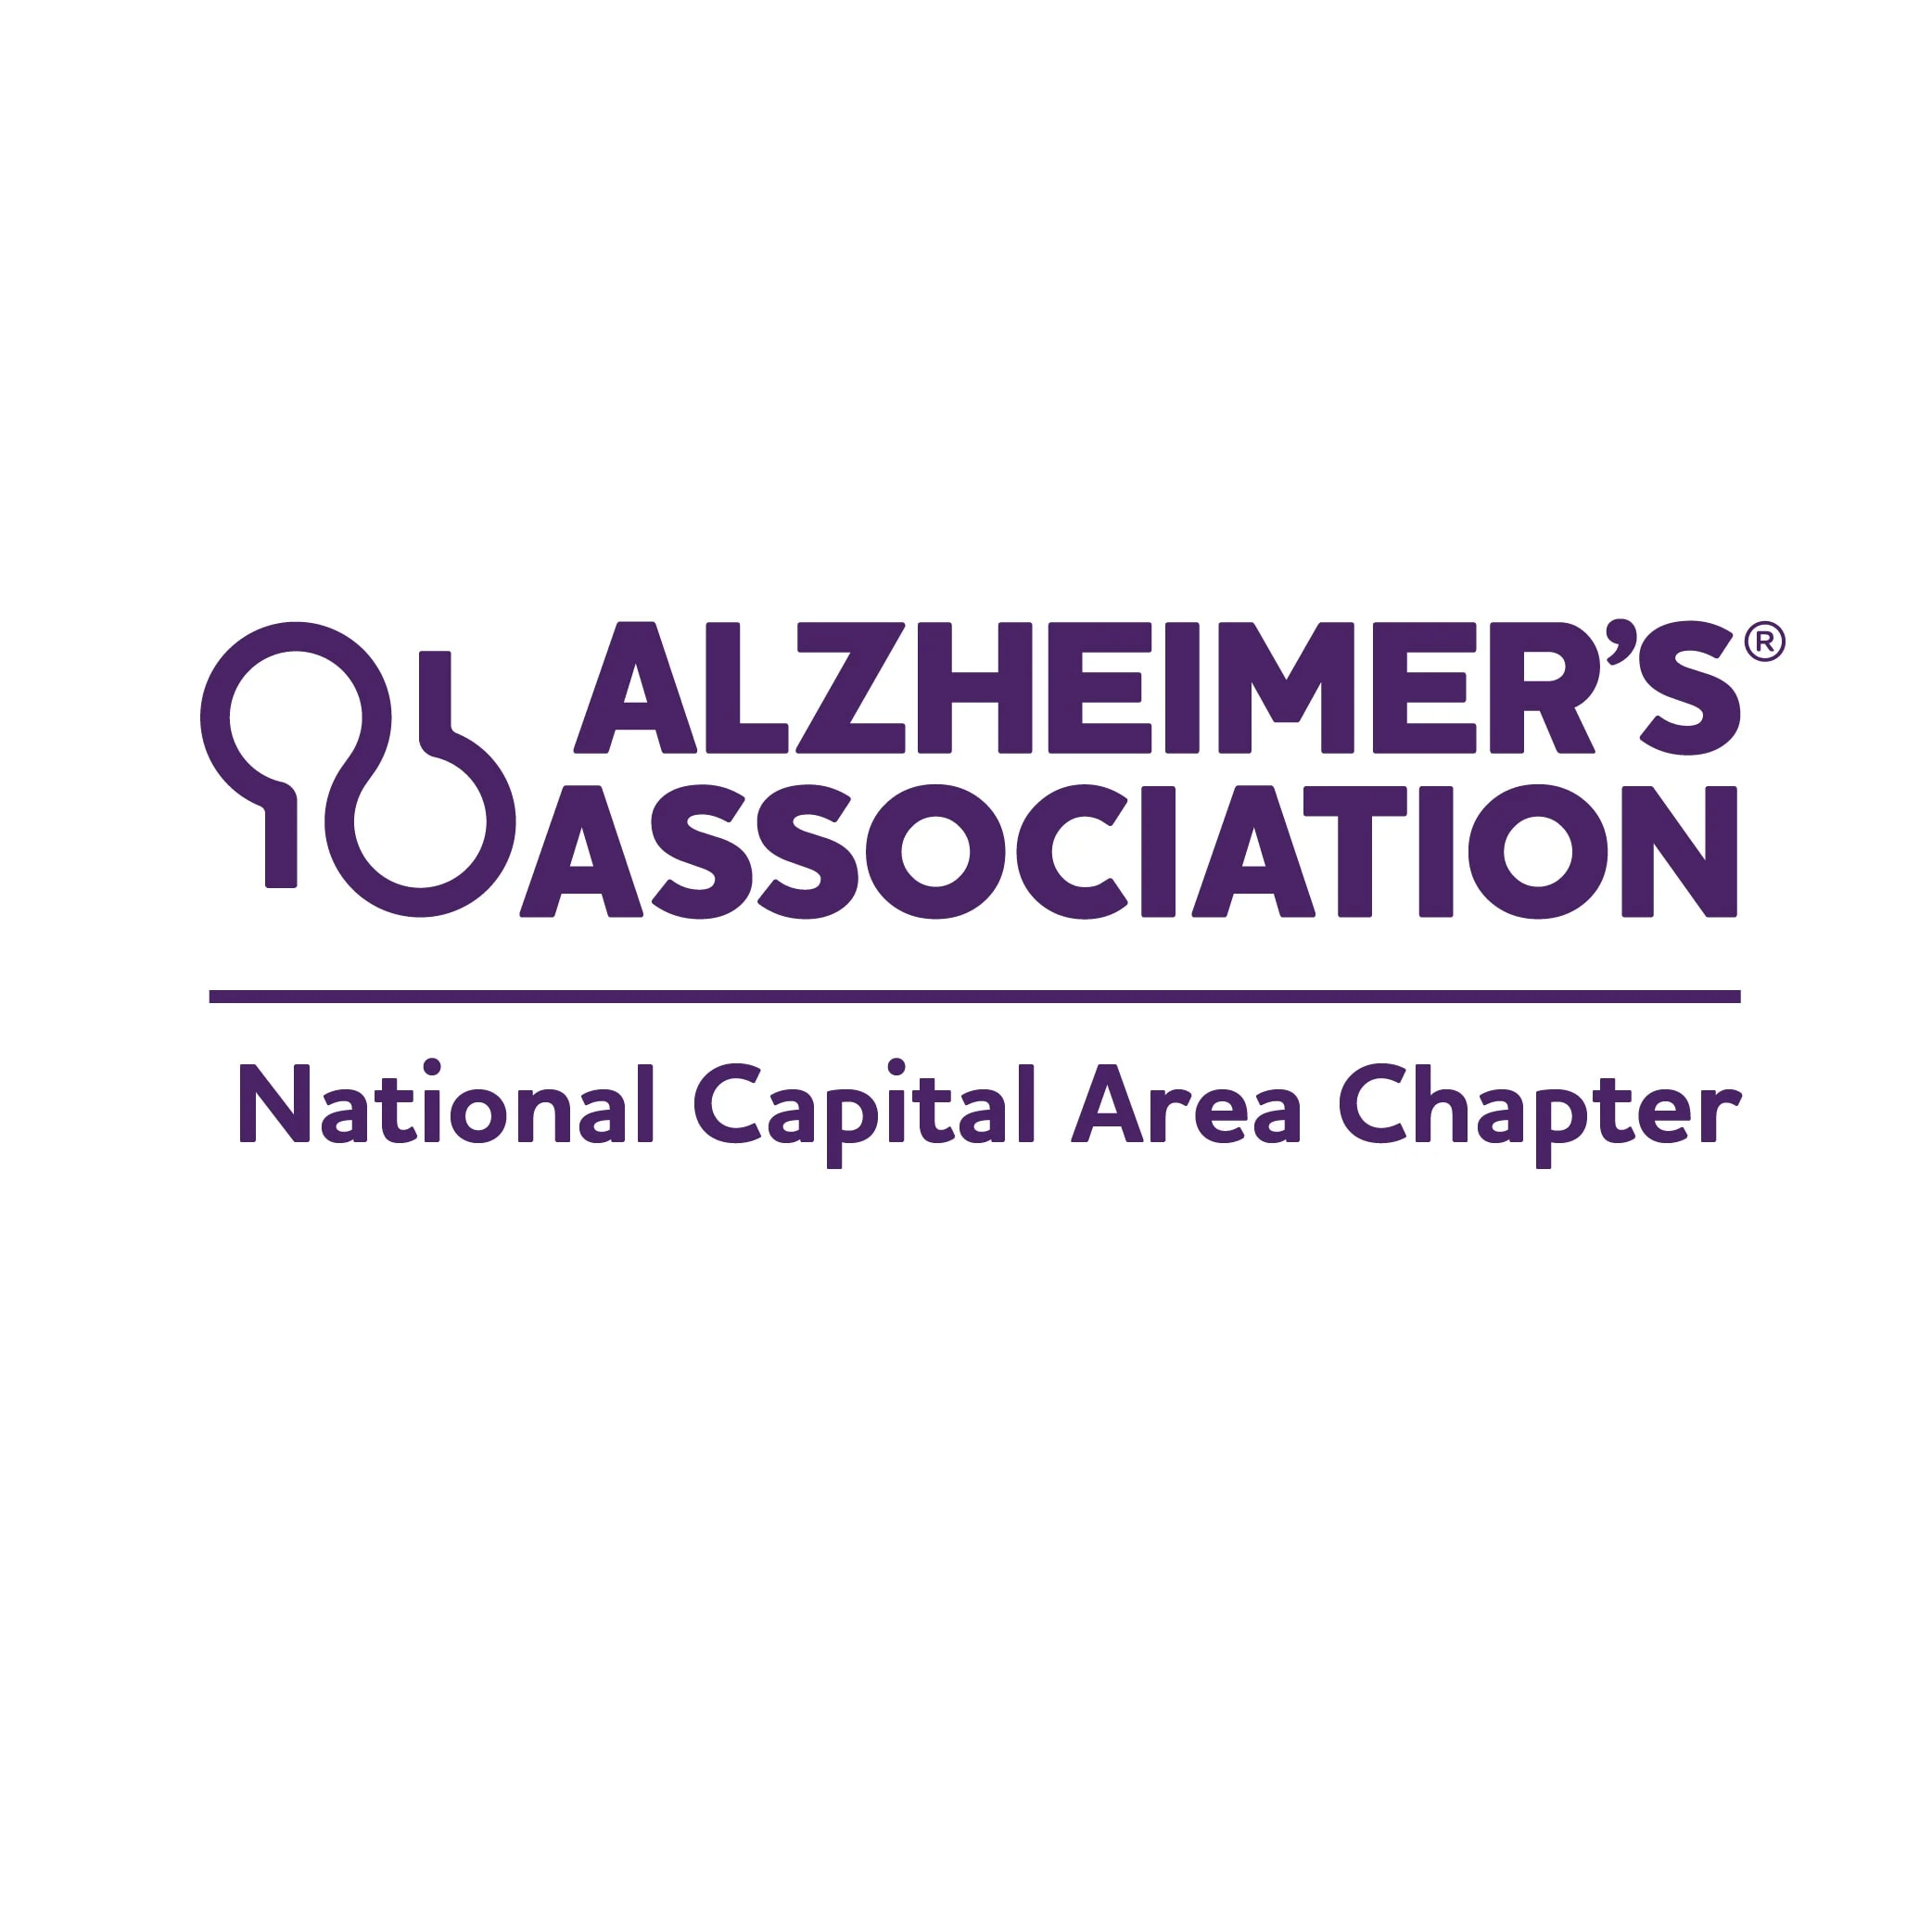 The Alzheimer's Association National Capital Area Chapter